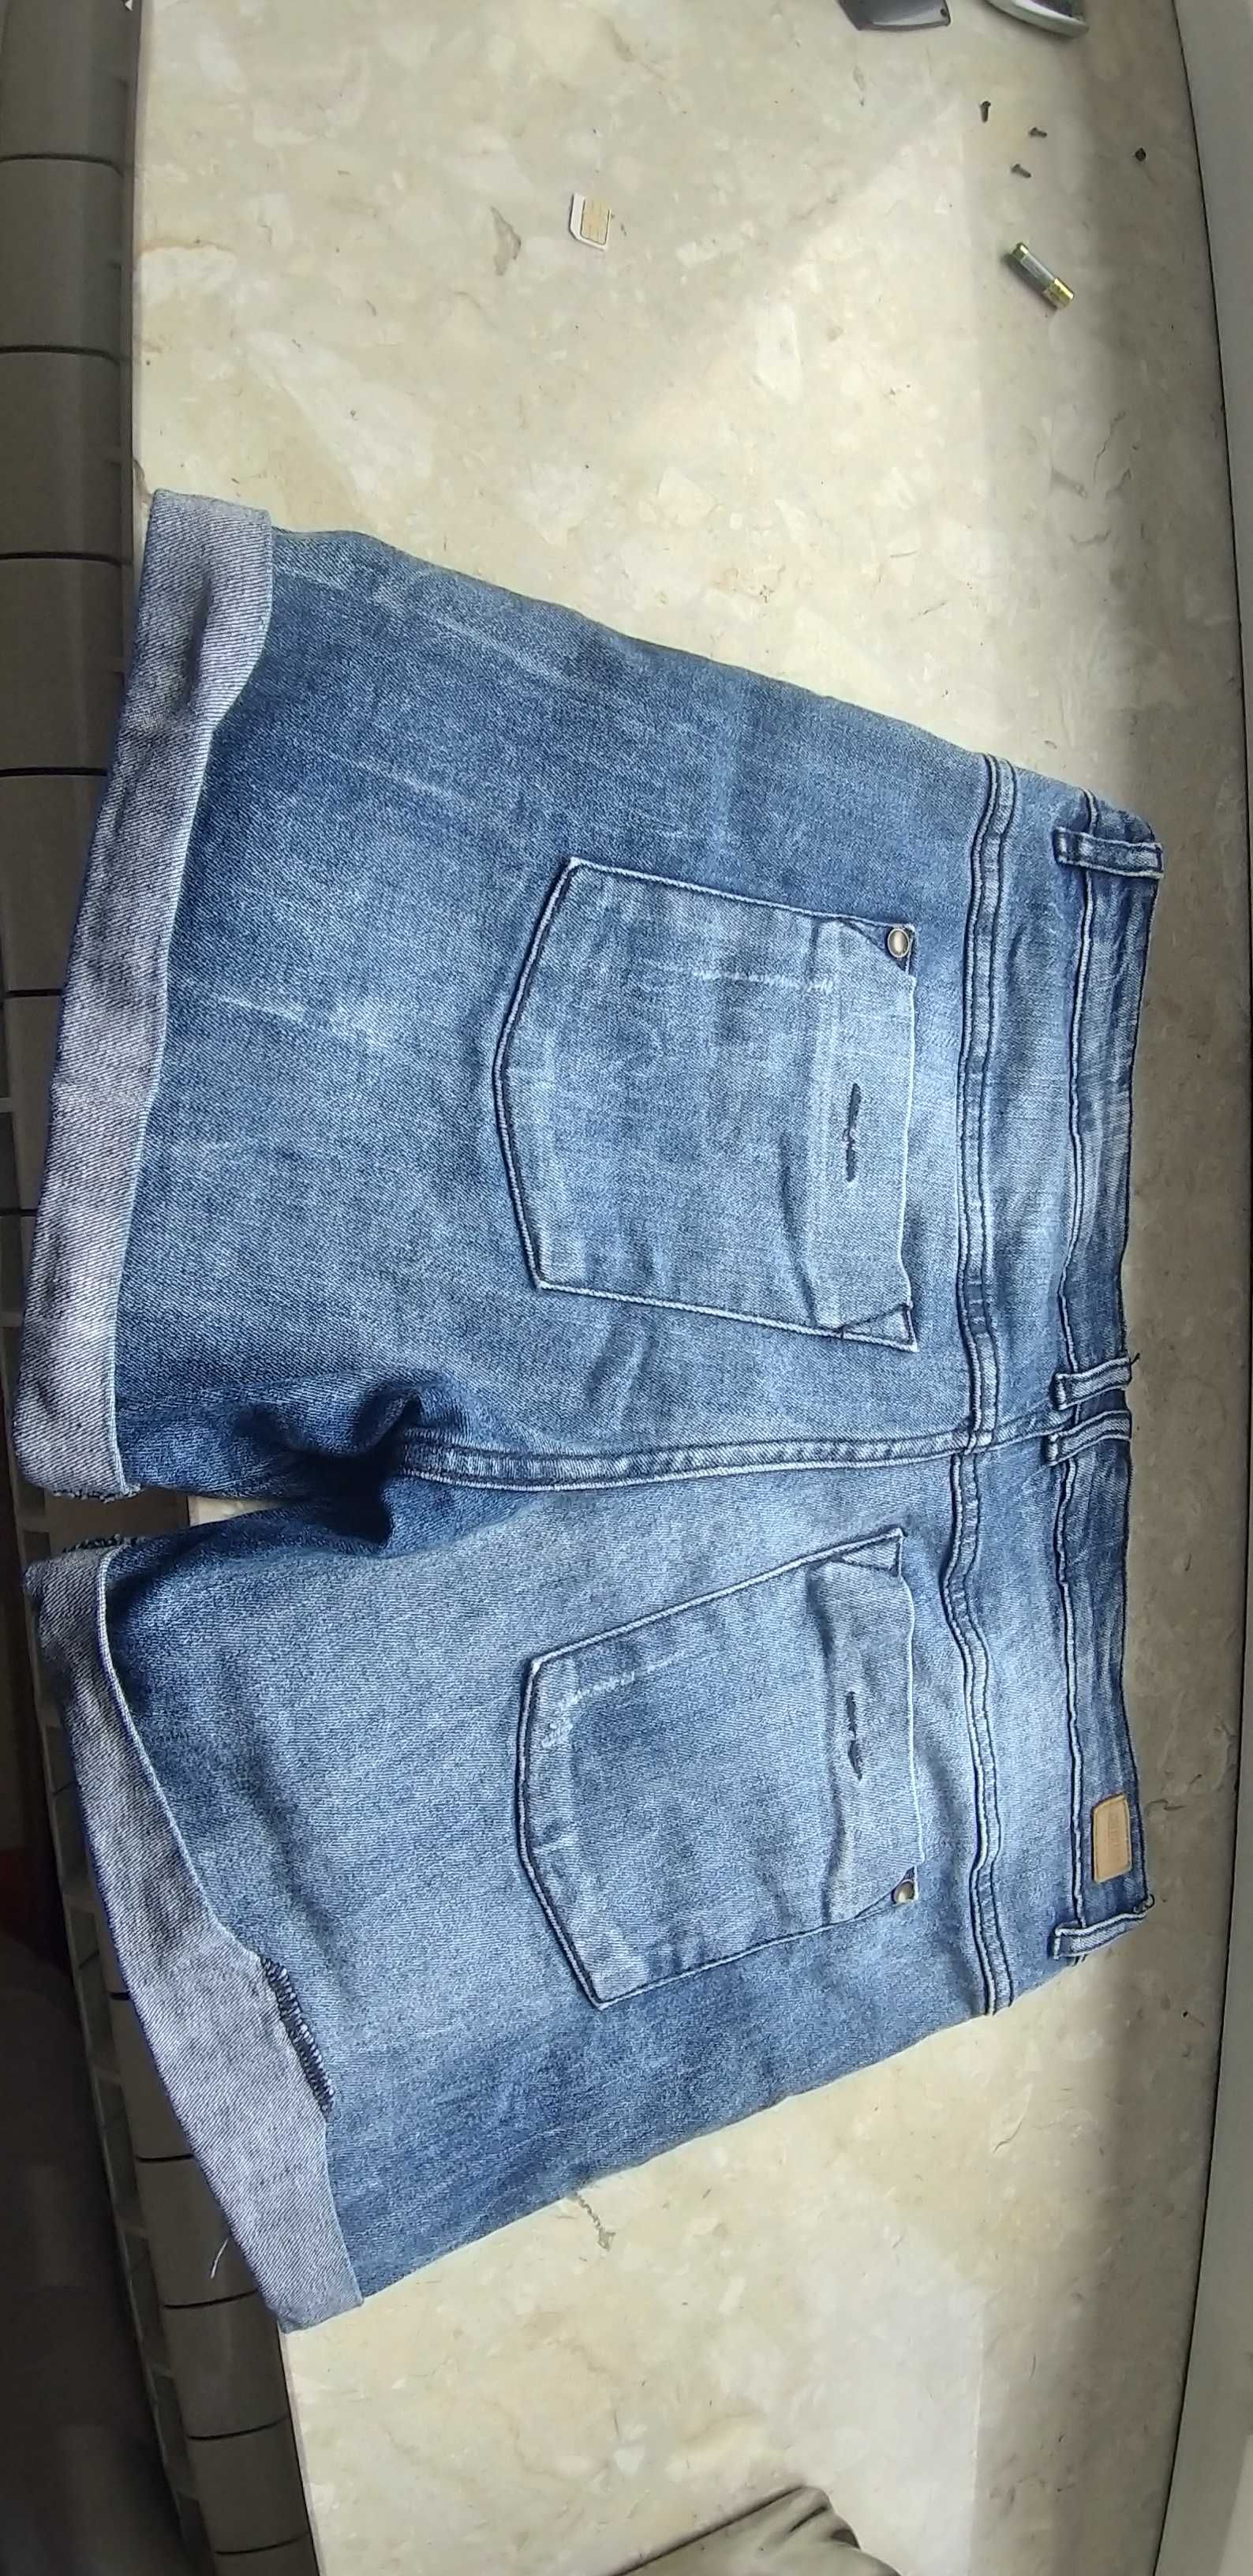 Shorty 82 cm L w pasie nowe jeans